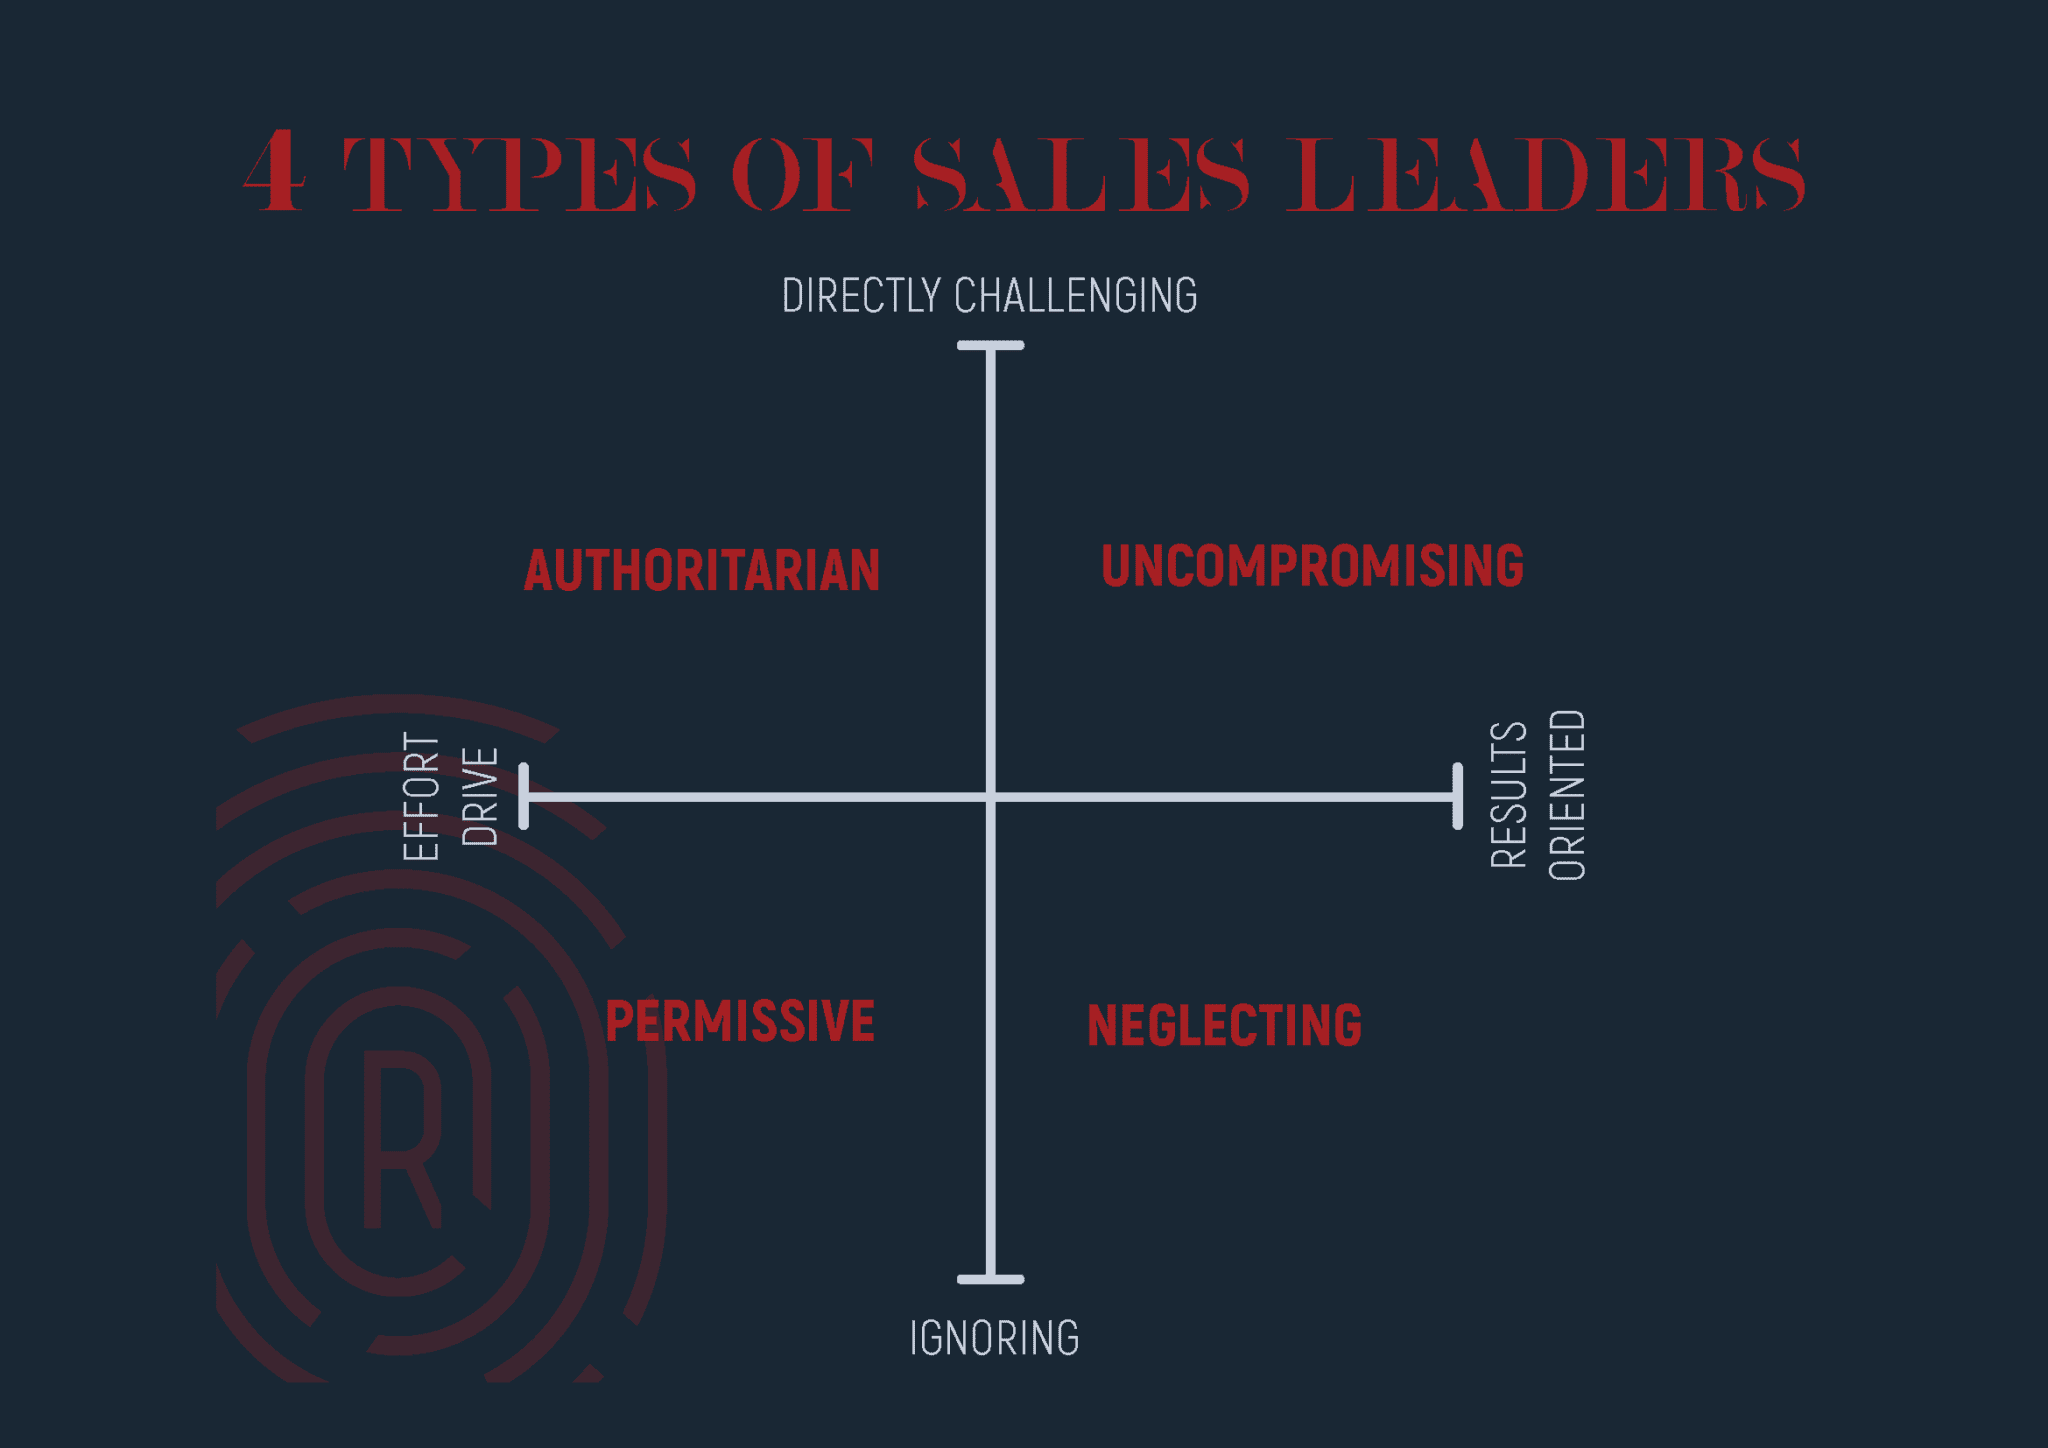 Leadership management styles